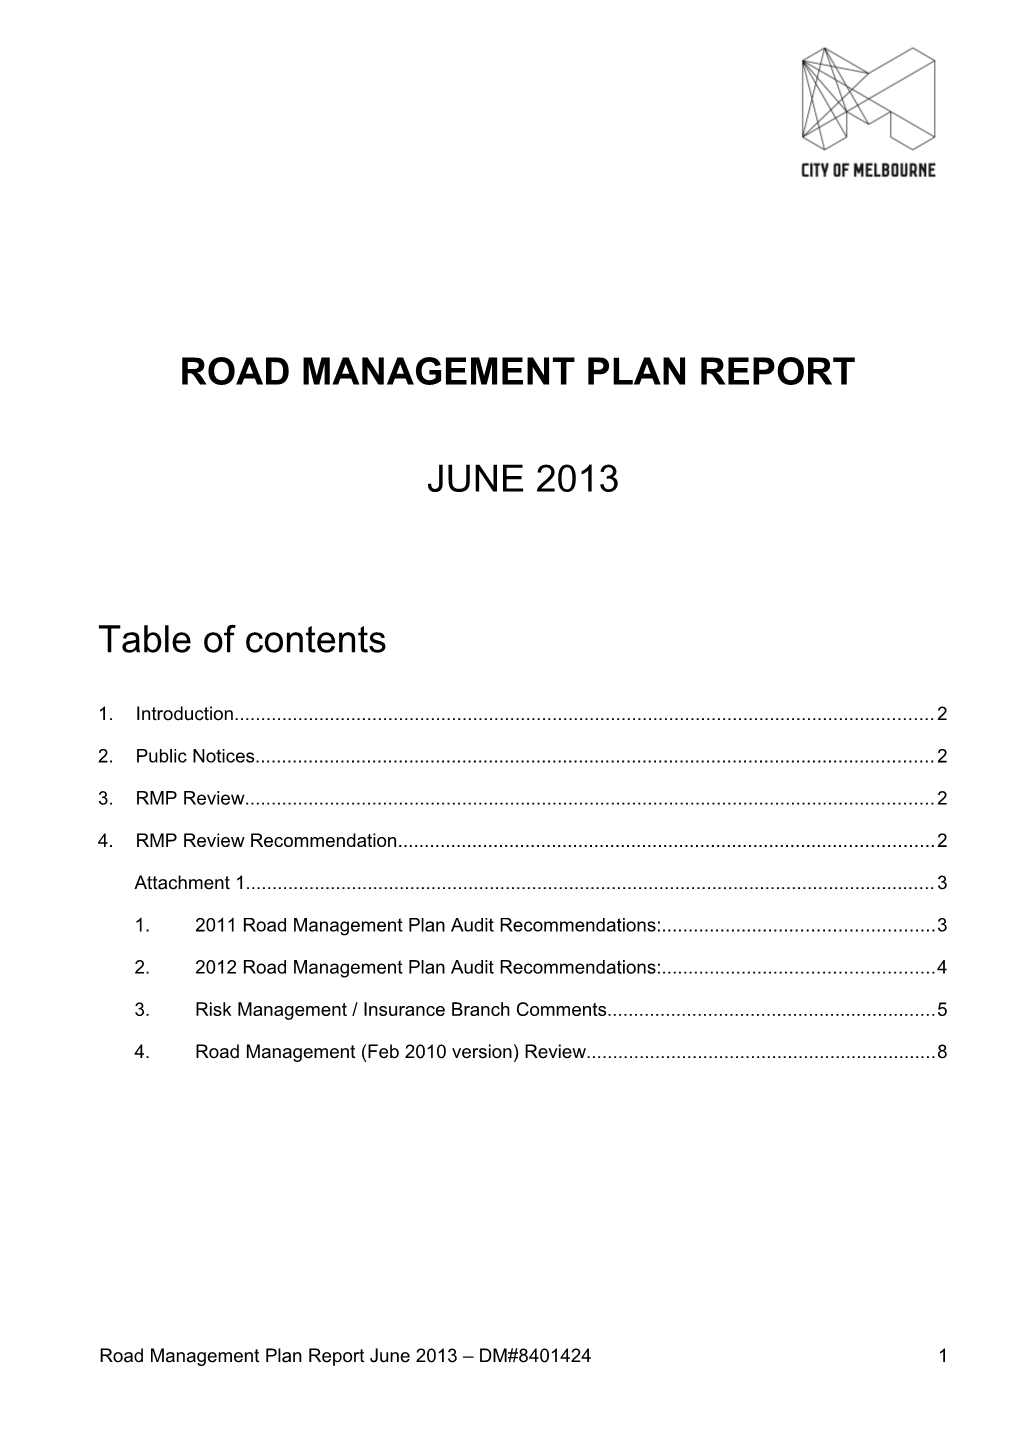 Road Management Plan Report, June 2013